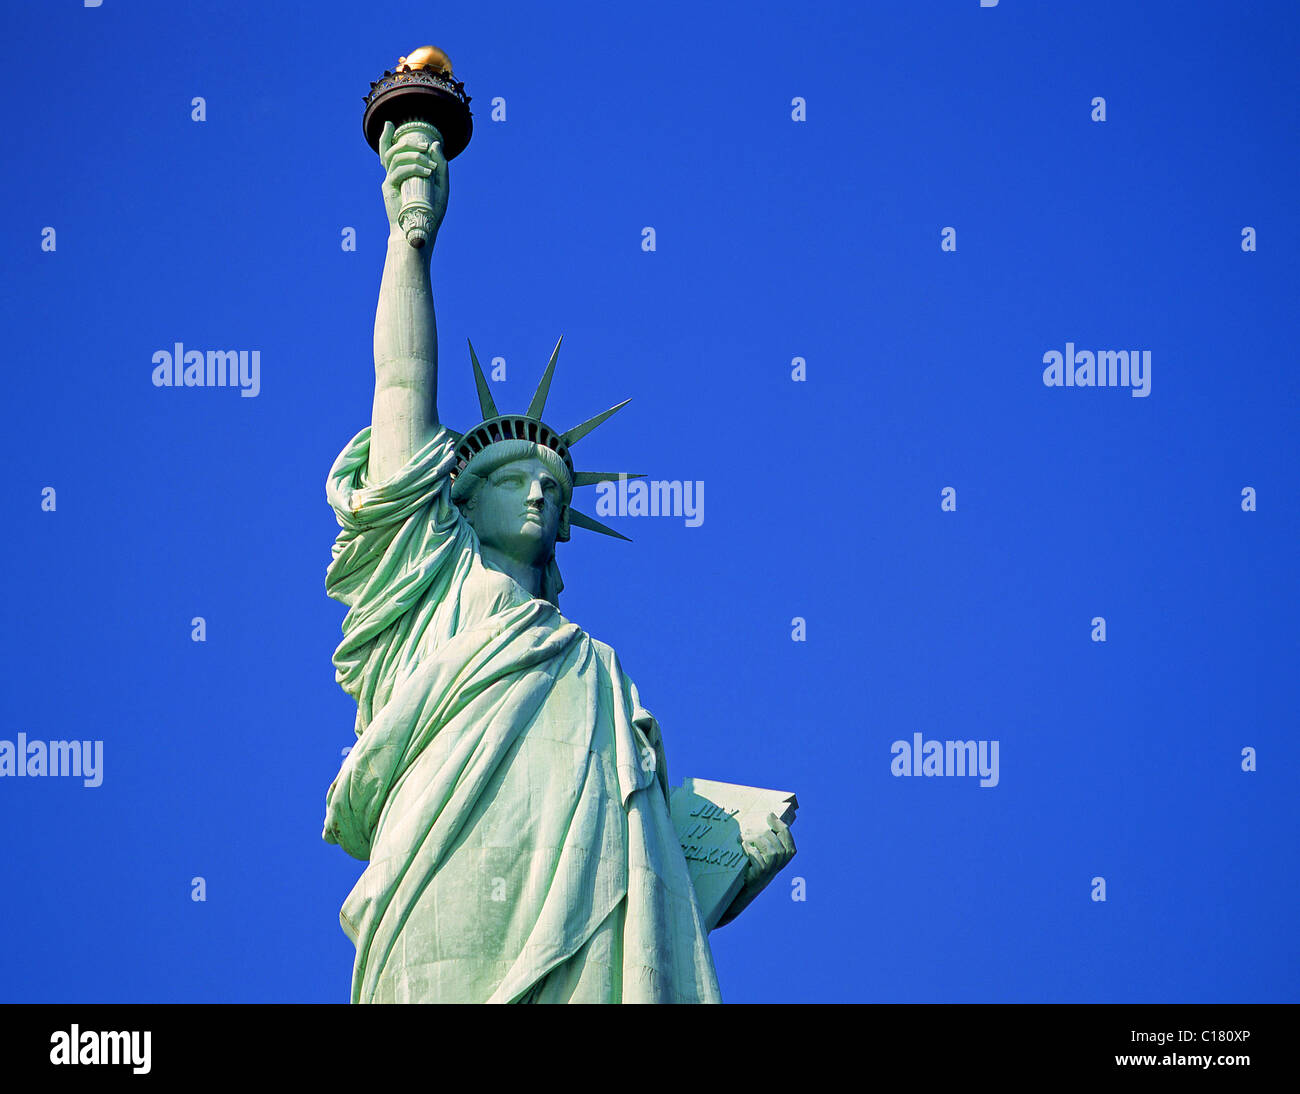 El Monumento Nacional de la estatua de la libertad, la isla de La Libertad, el puerto de Nueva York, Estado de Nueva York, Estados Unidos de América Foto de stock